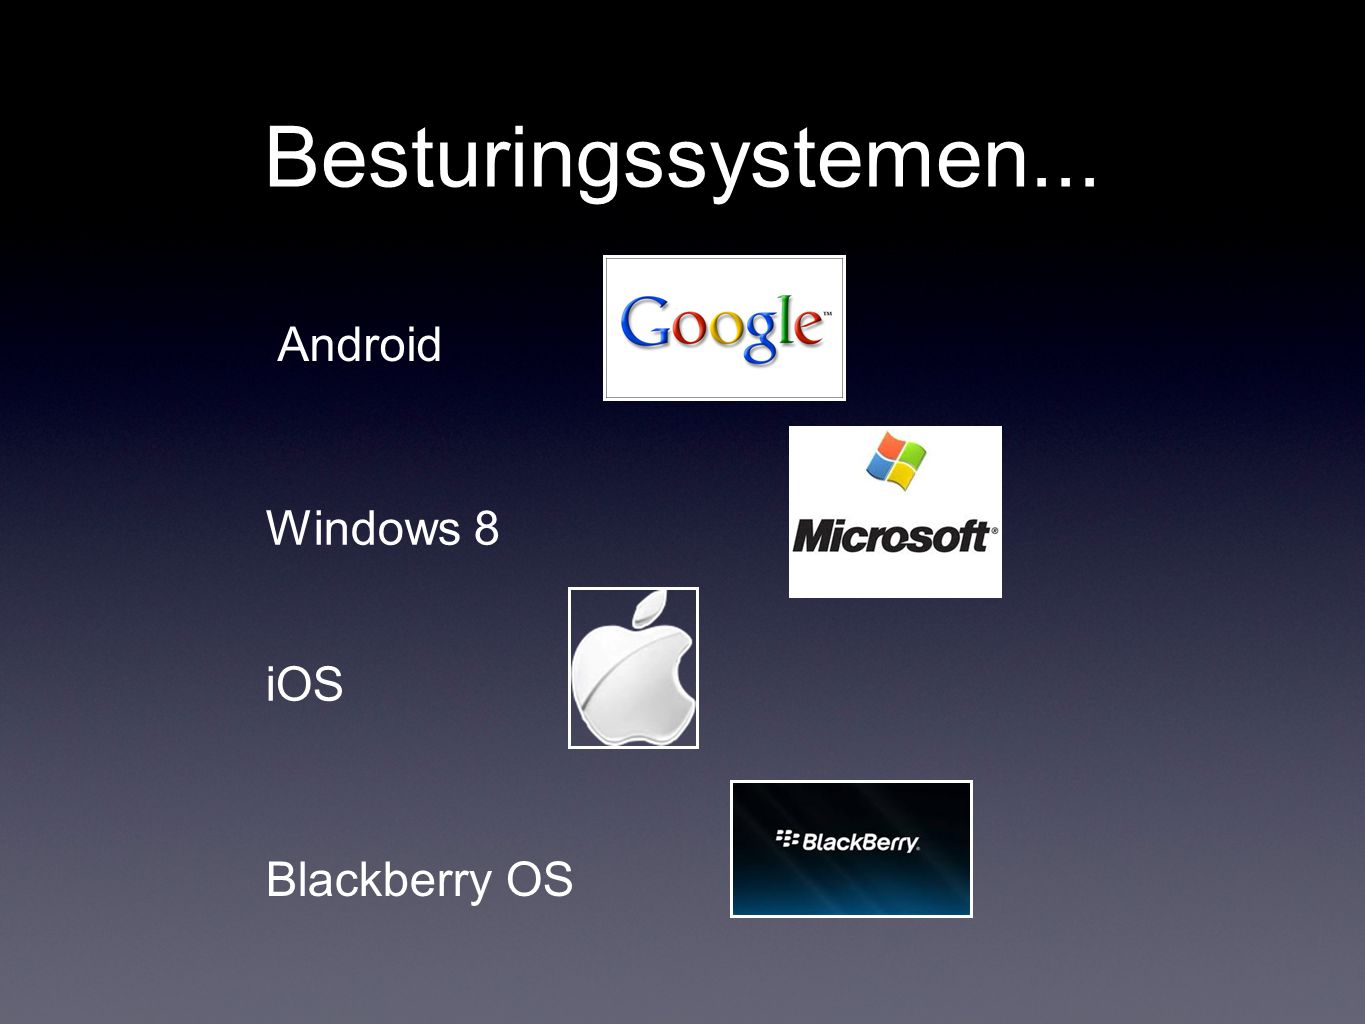 Besturingssystemen... Android Windows 8 iOS Blackberry OS